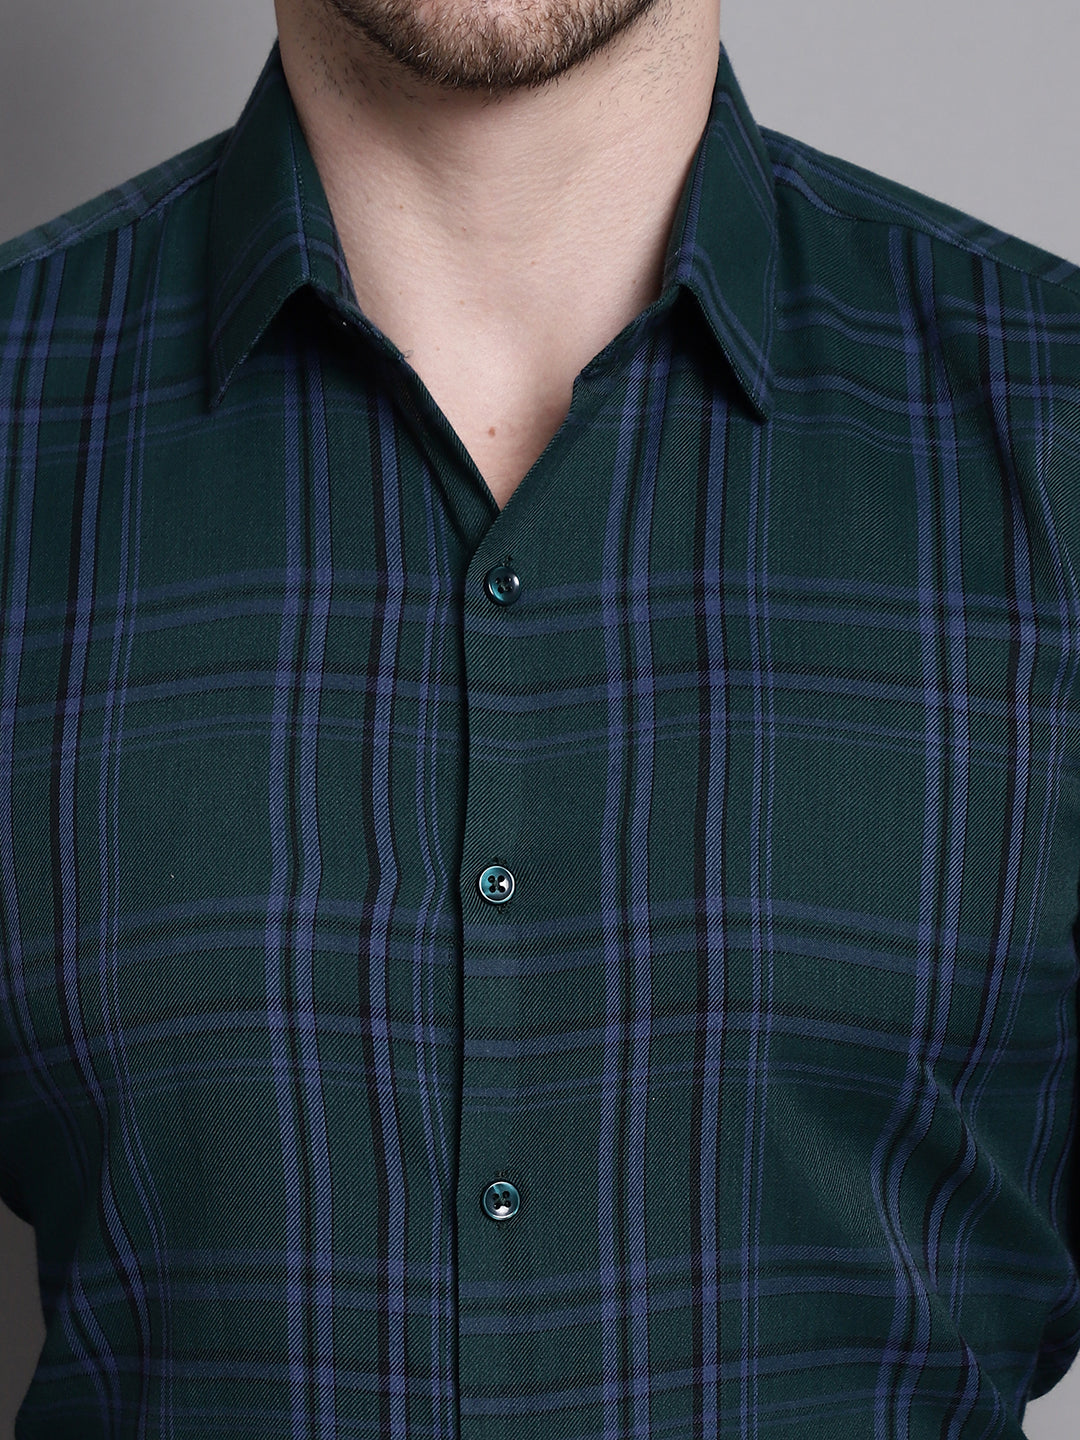 Men's Classic Checks Formal Shirt